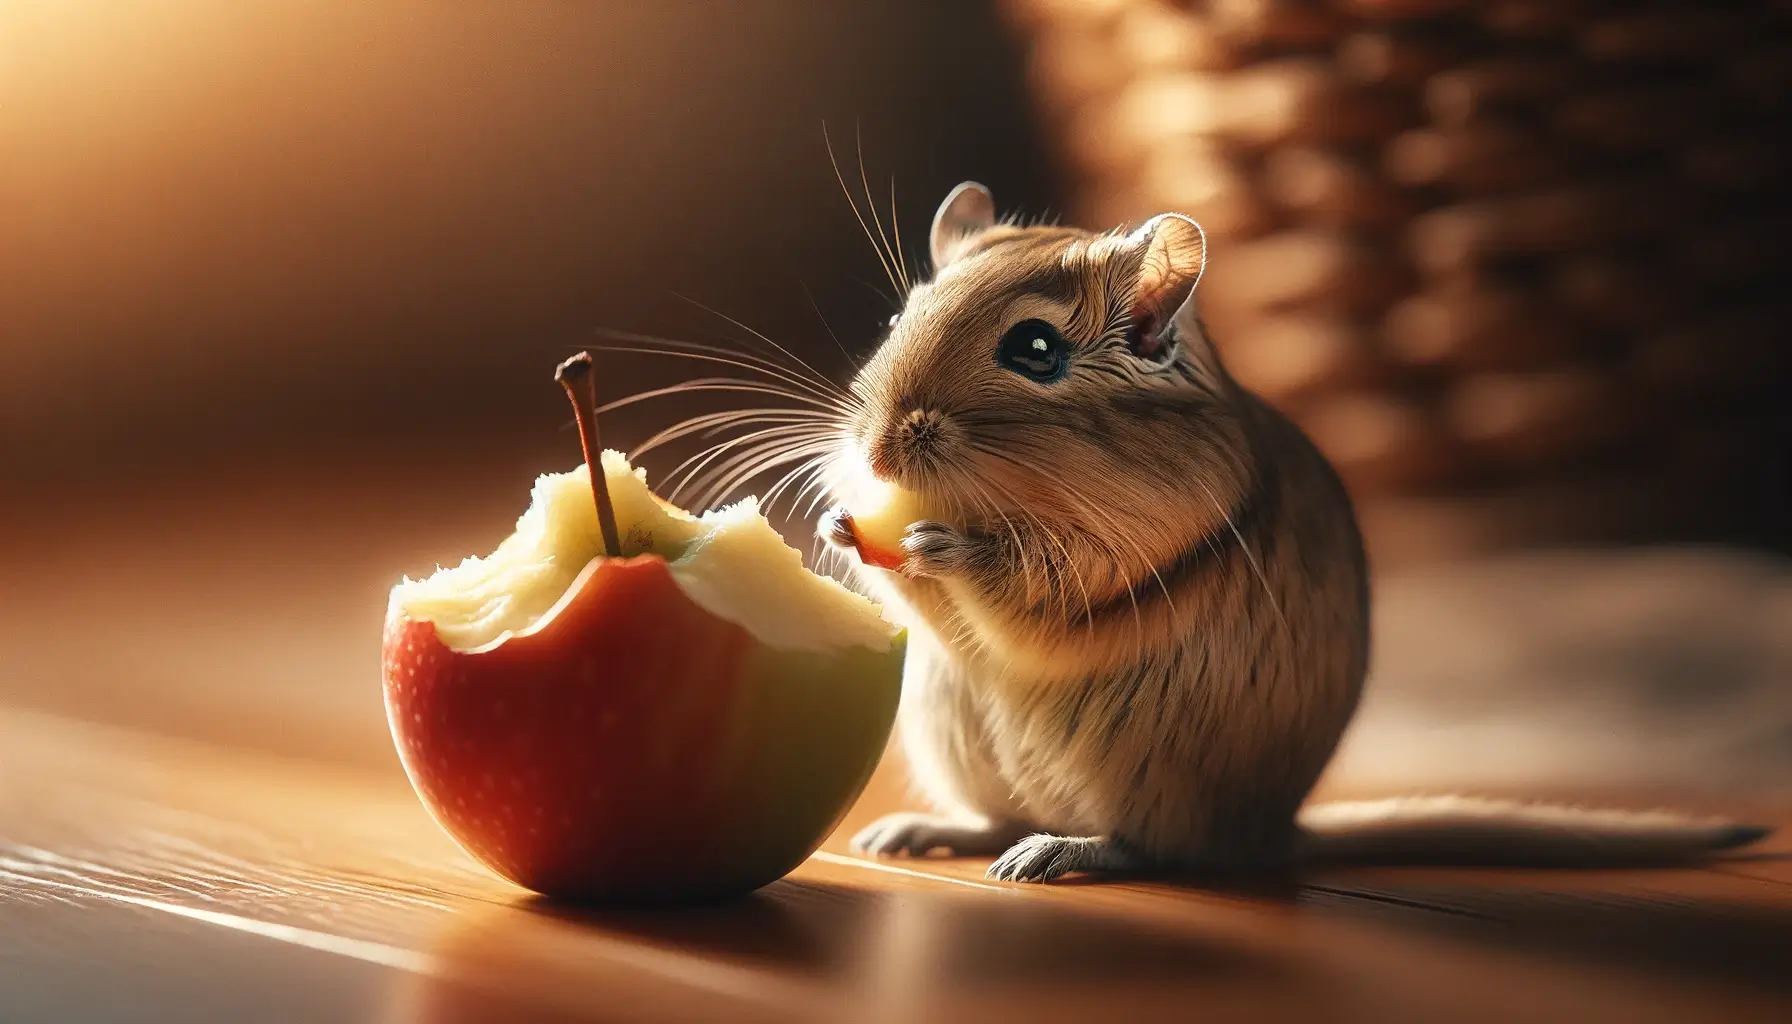 Can Gerbils Eat Apples